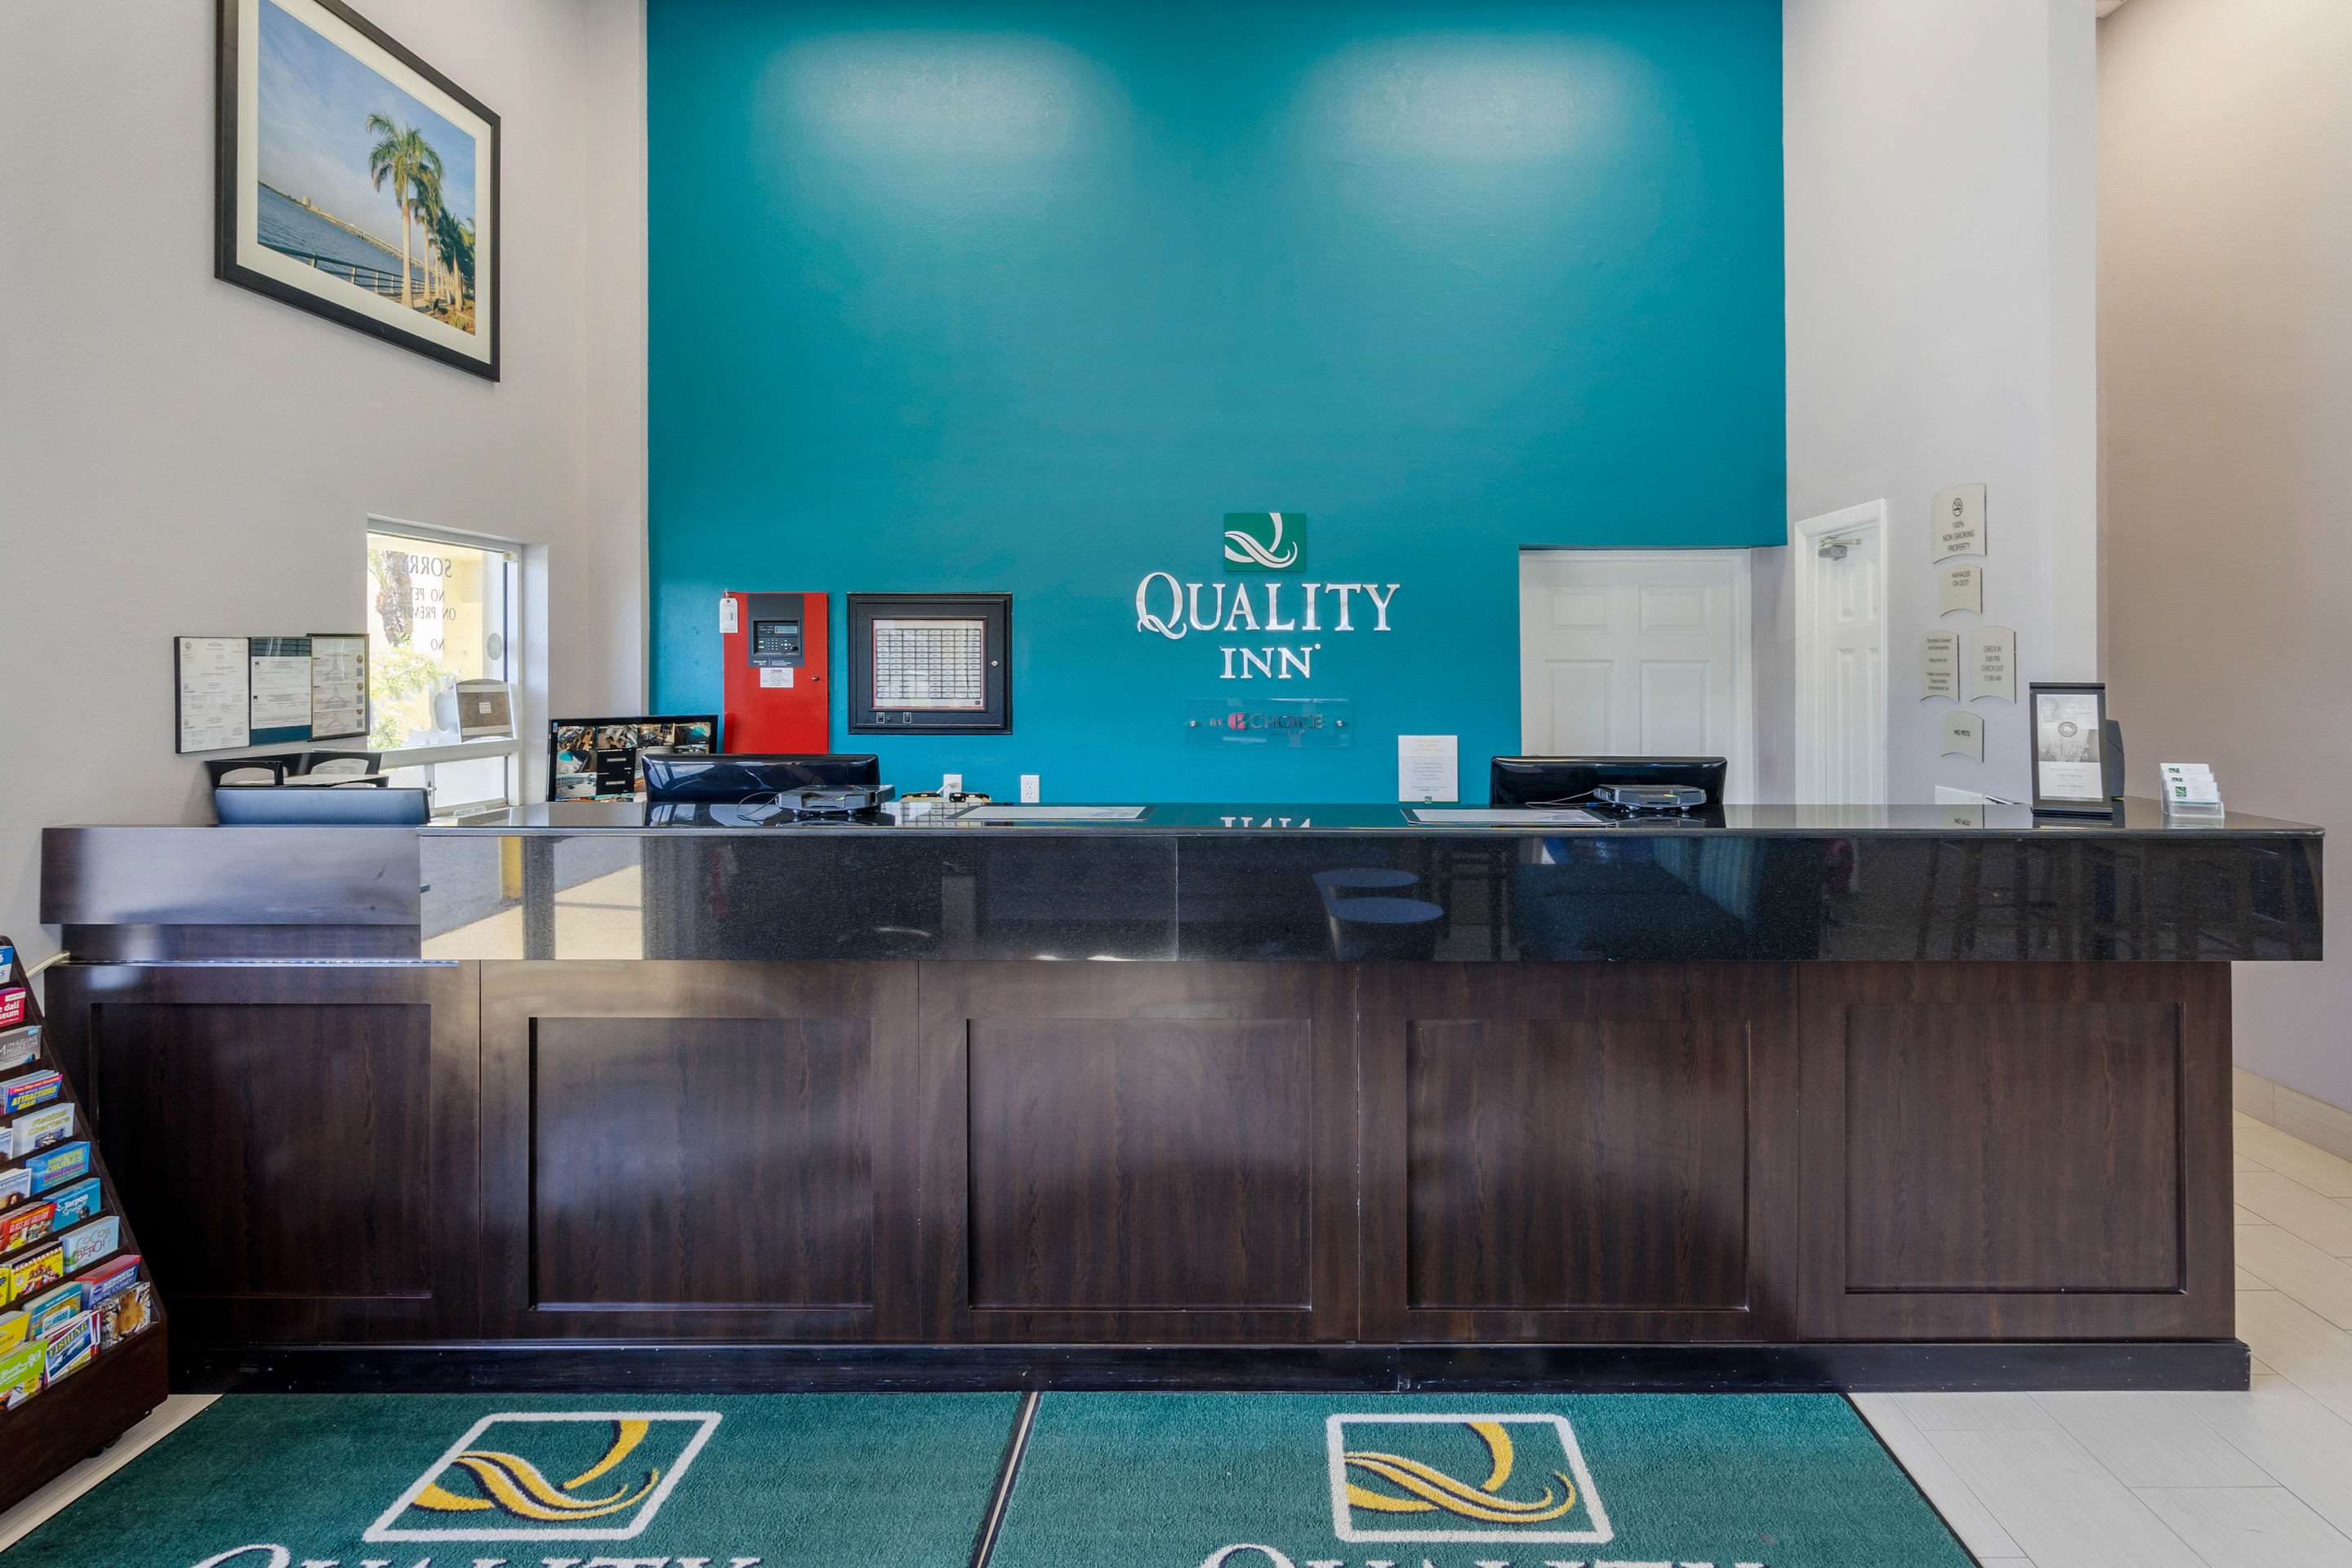 Quality Inn Near Ellenton Outlet Mall Coupons near me in Bradenton, FL 34208 | 8coupons